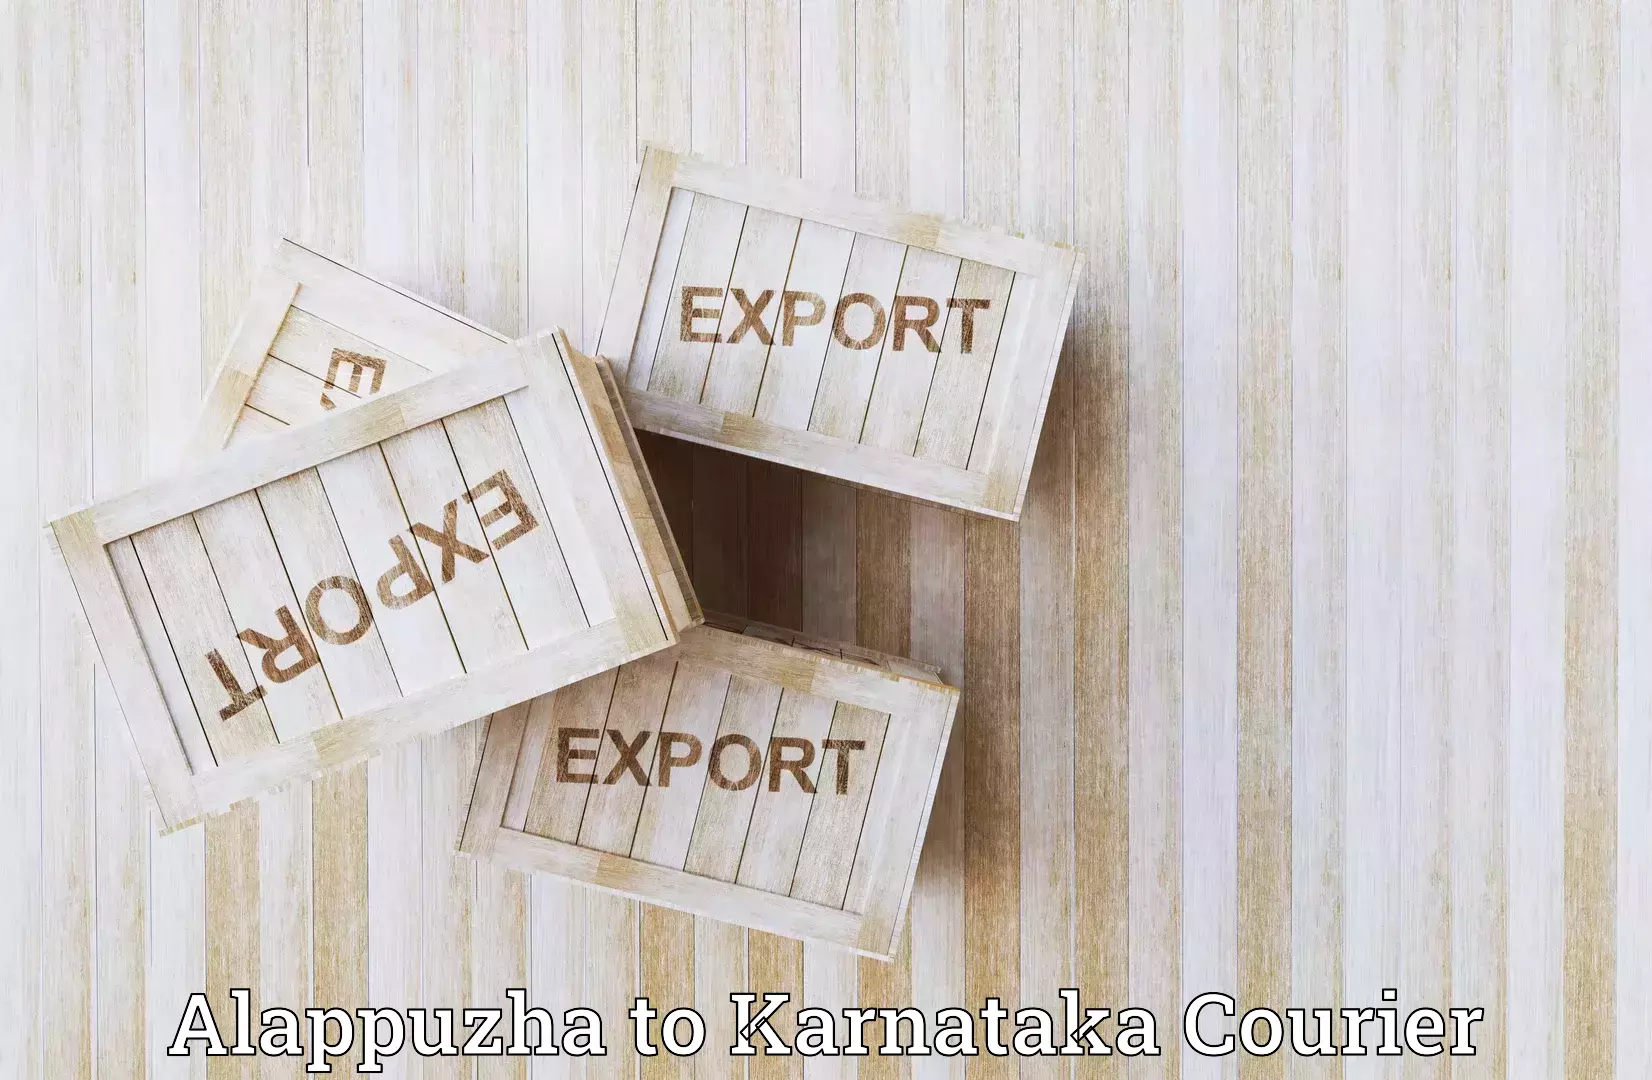 User-friendly delivery service Alappuzha to Karnataka